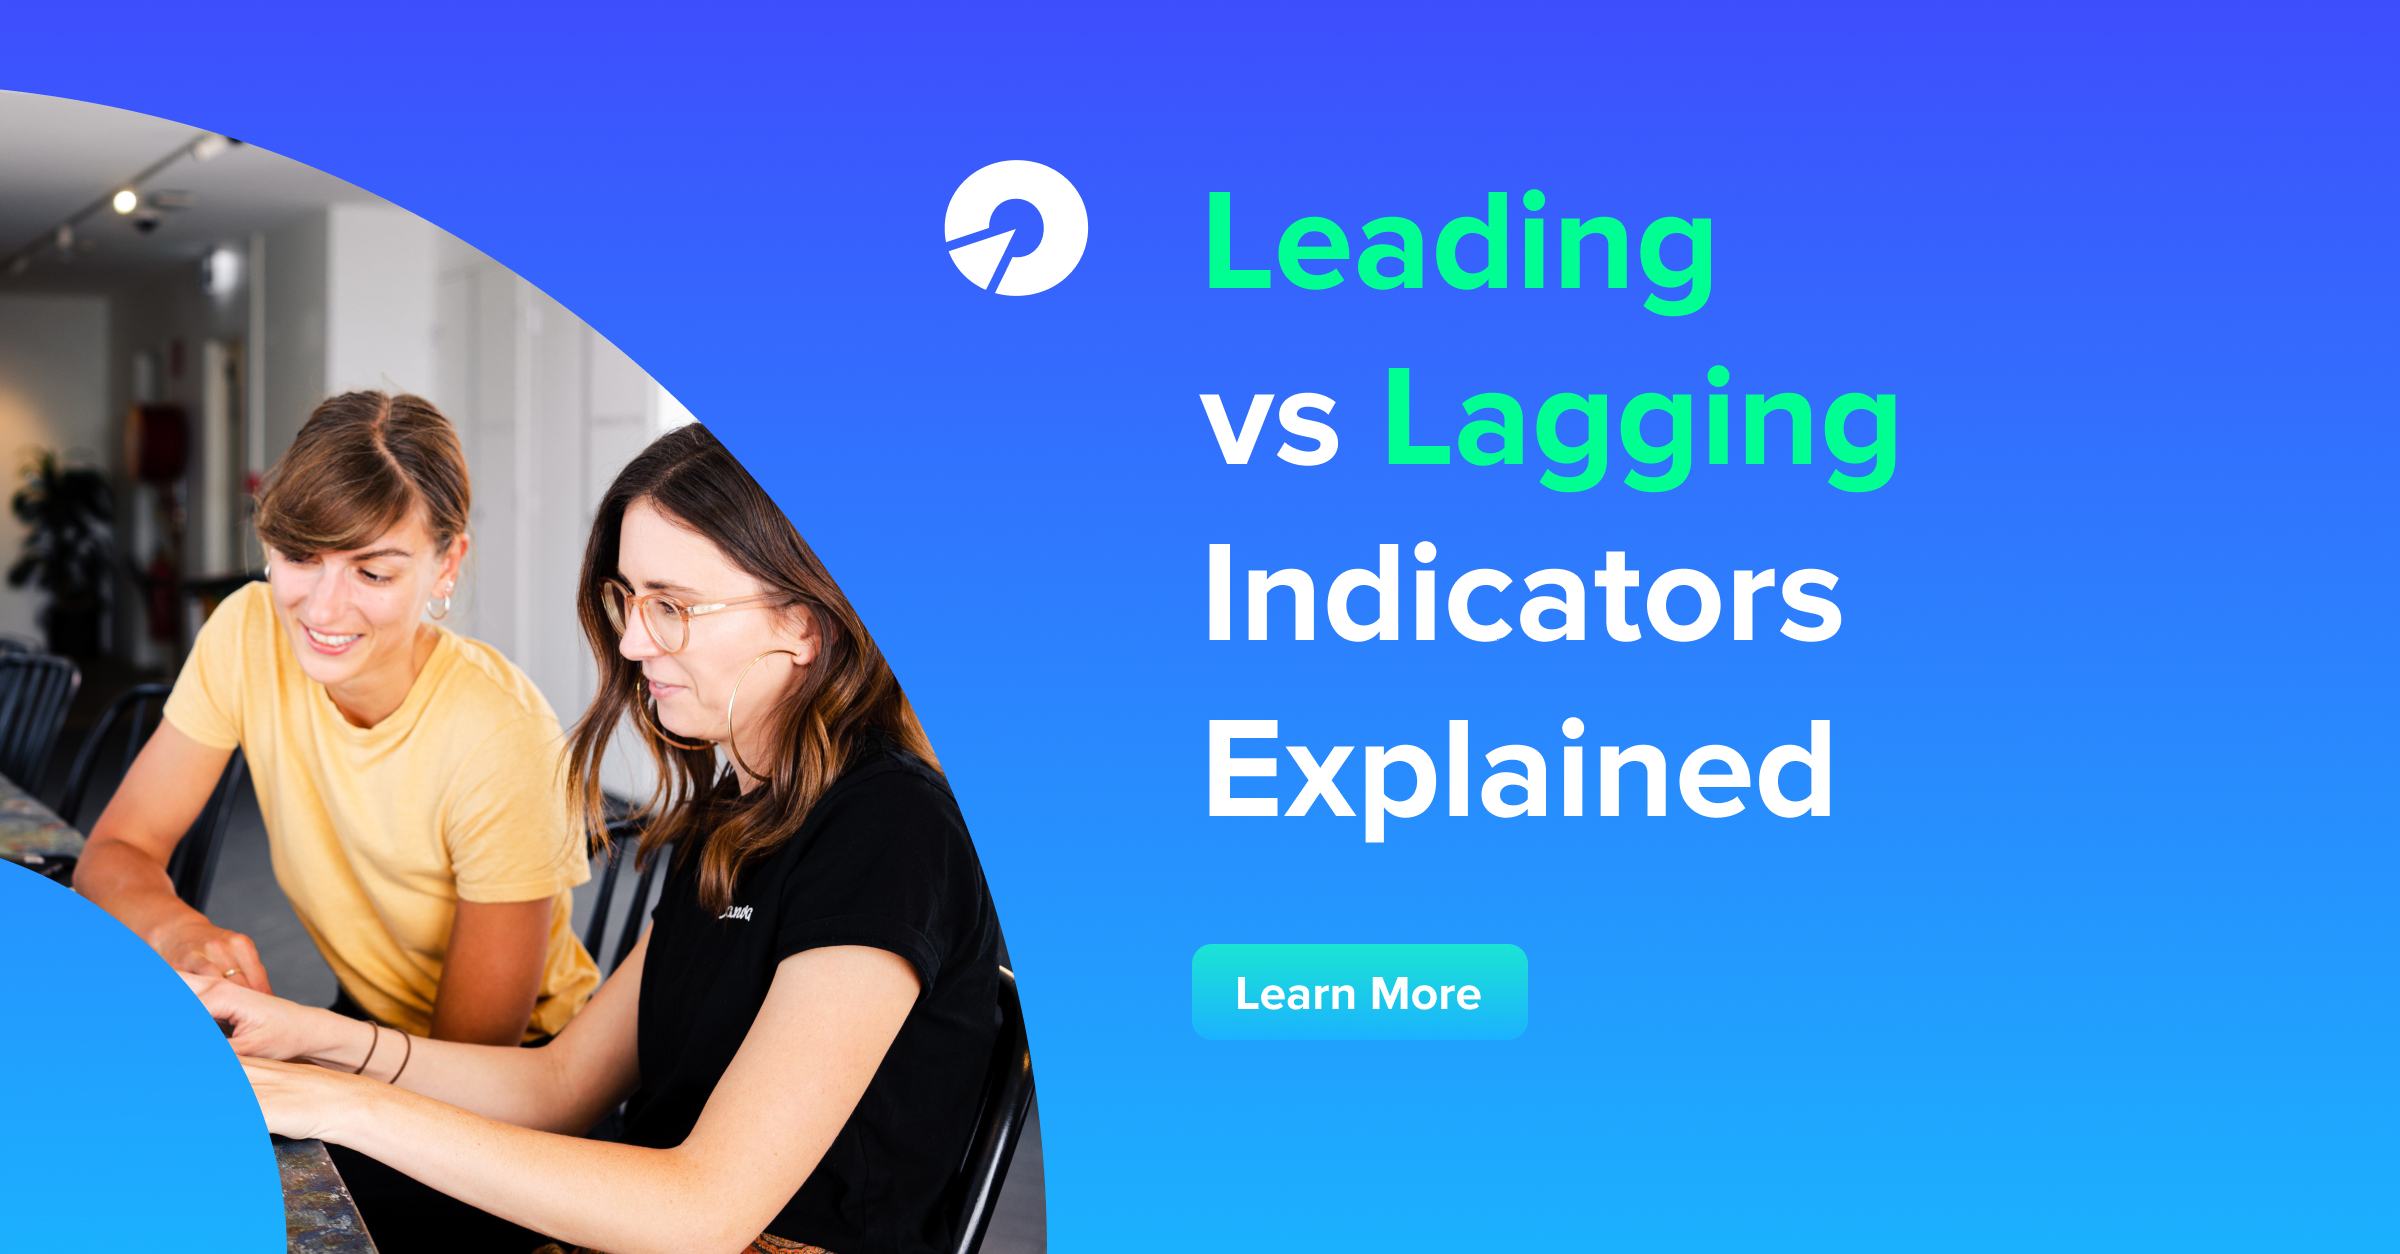 Leading vs Lagging Indicators Explained